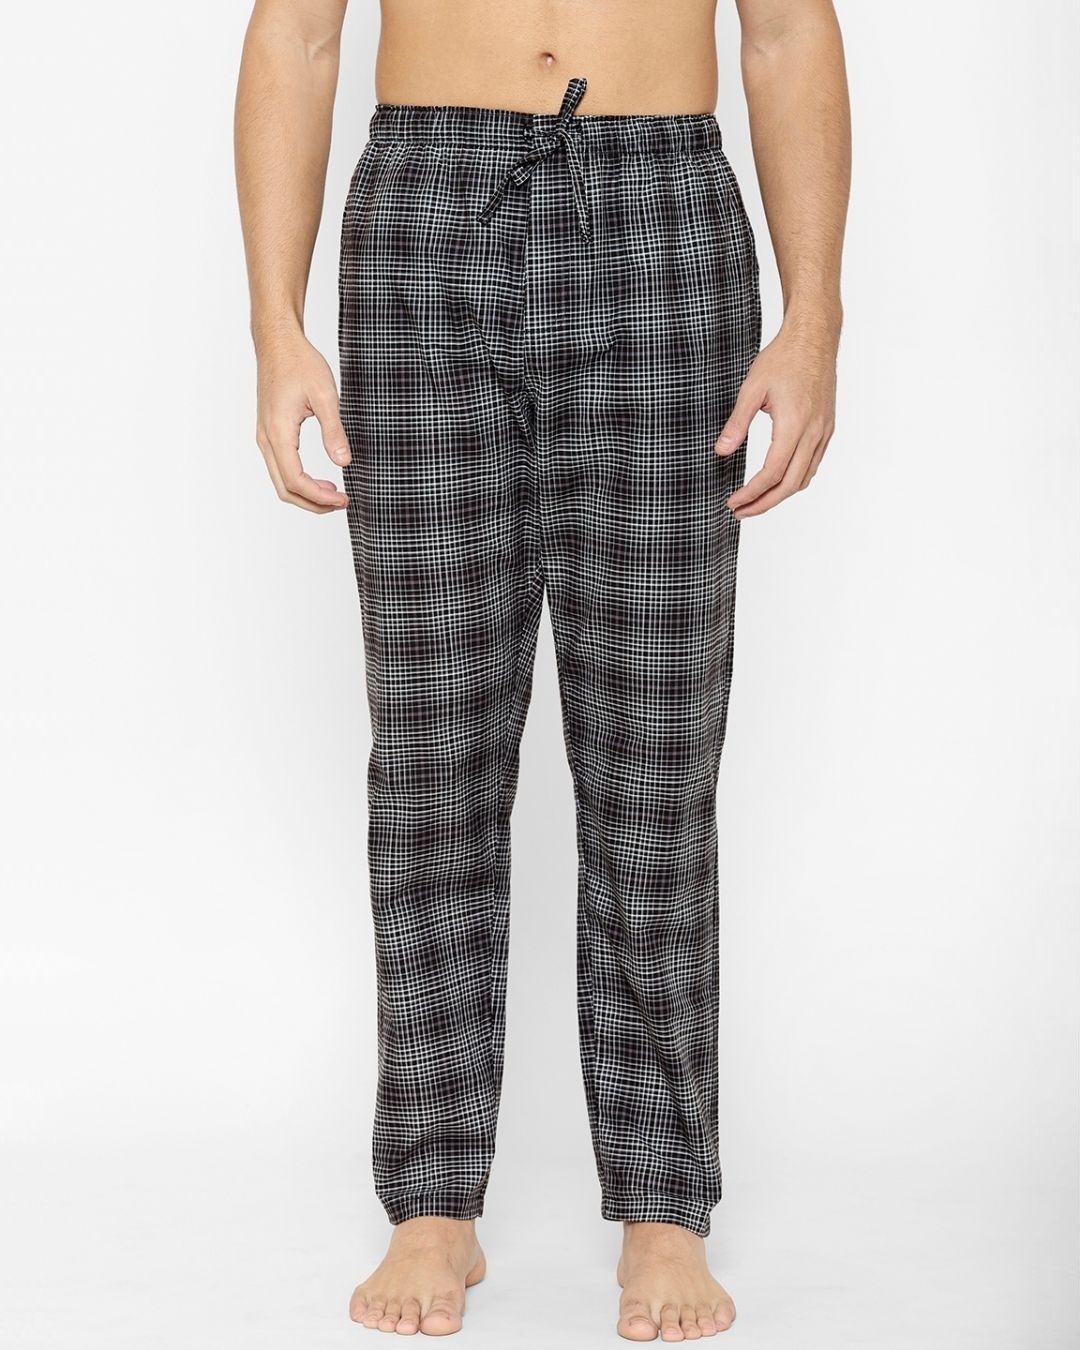 Shop Men's Black Super Combed Cotton Checkered Pyjama (Pack of 2)-Design